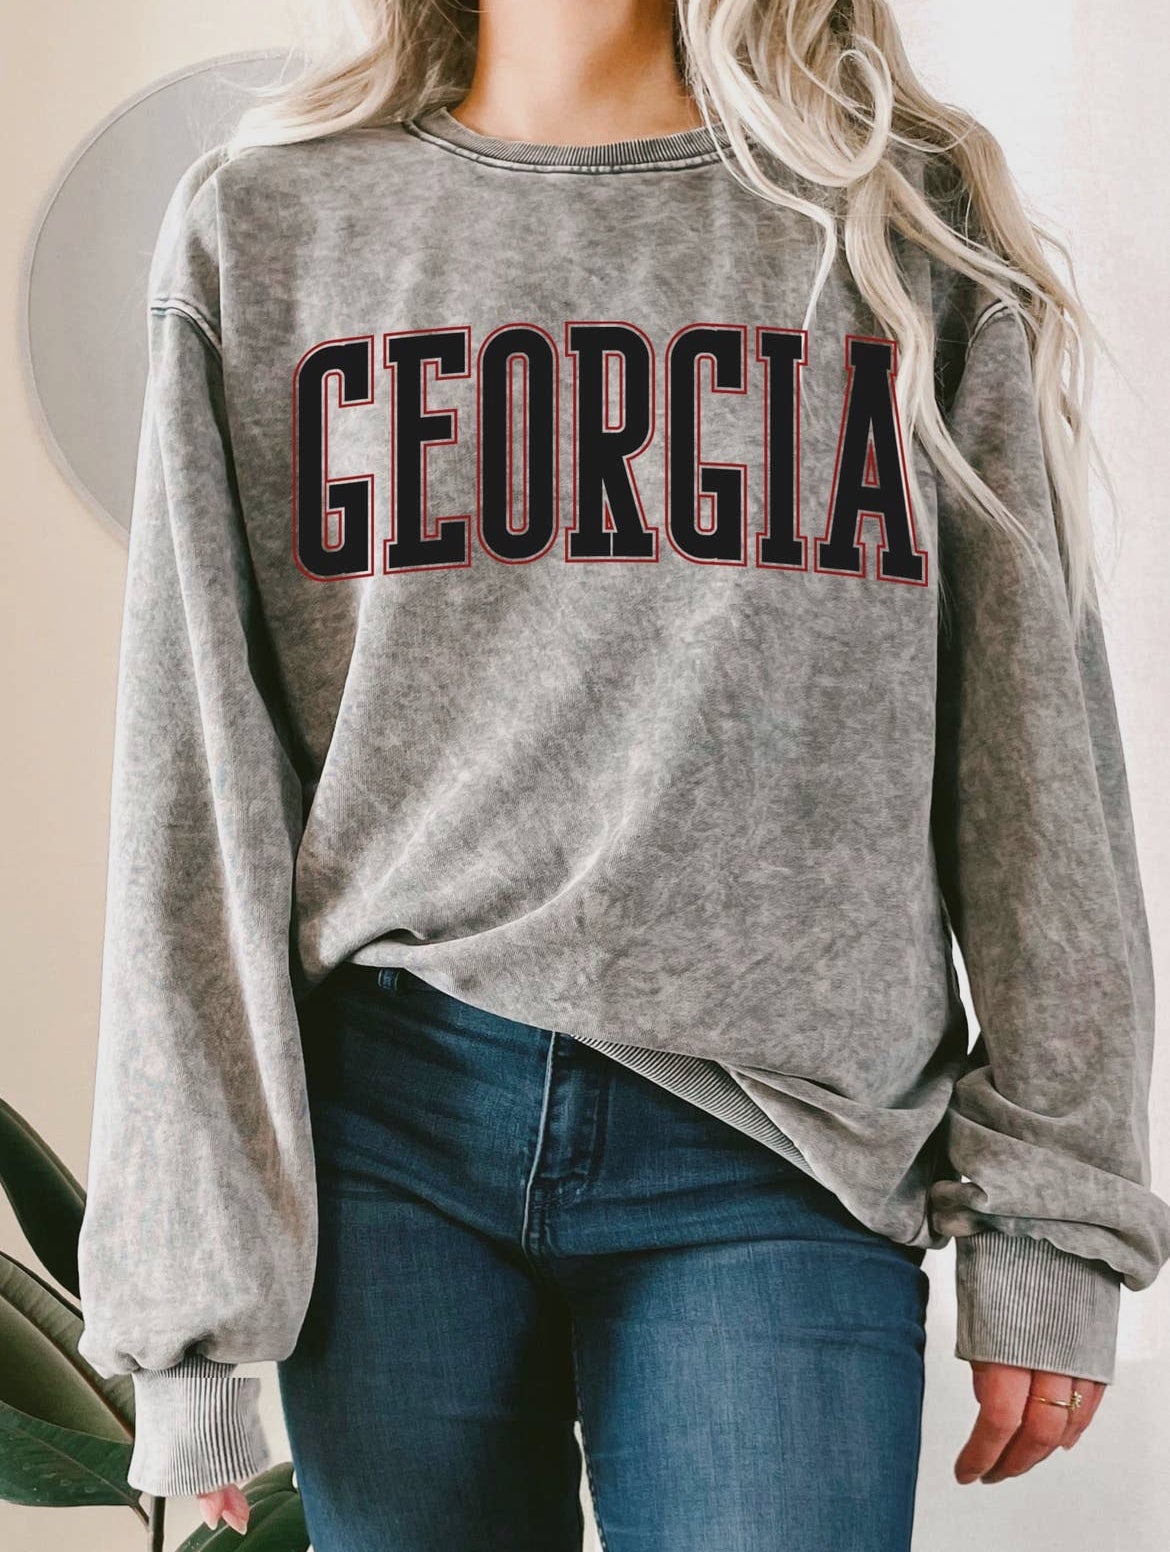 Lulu Grace Designs UGA Puff Glitter Shirt: College Football Fan Gear & Apparel Unisex Tee / M